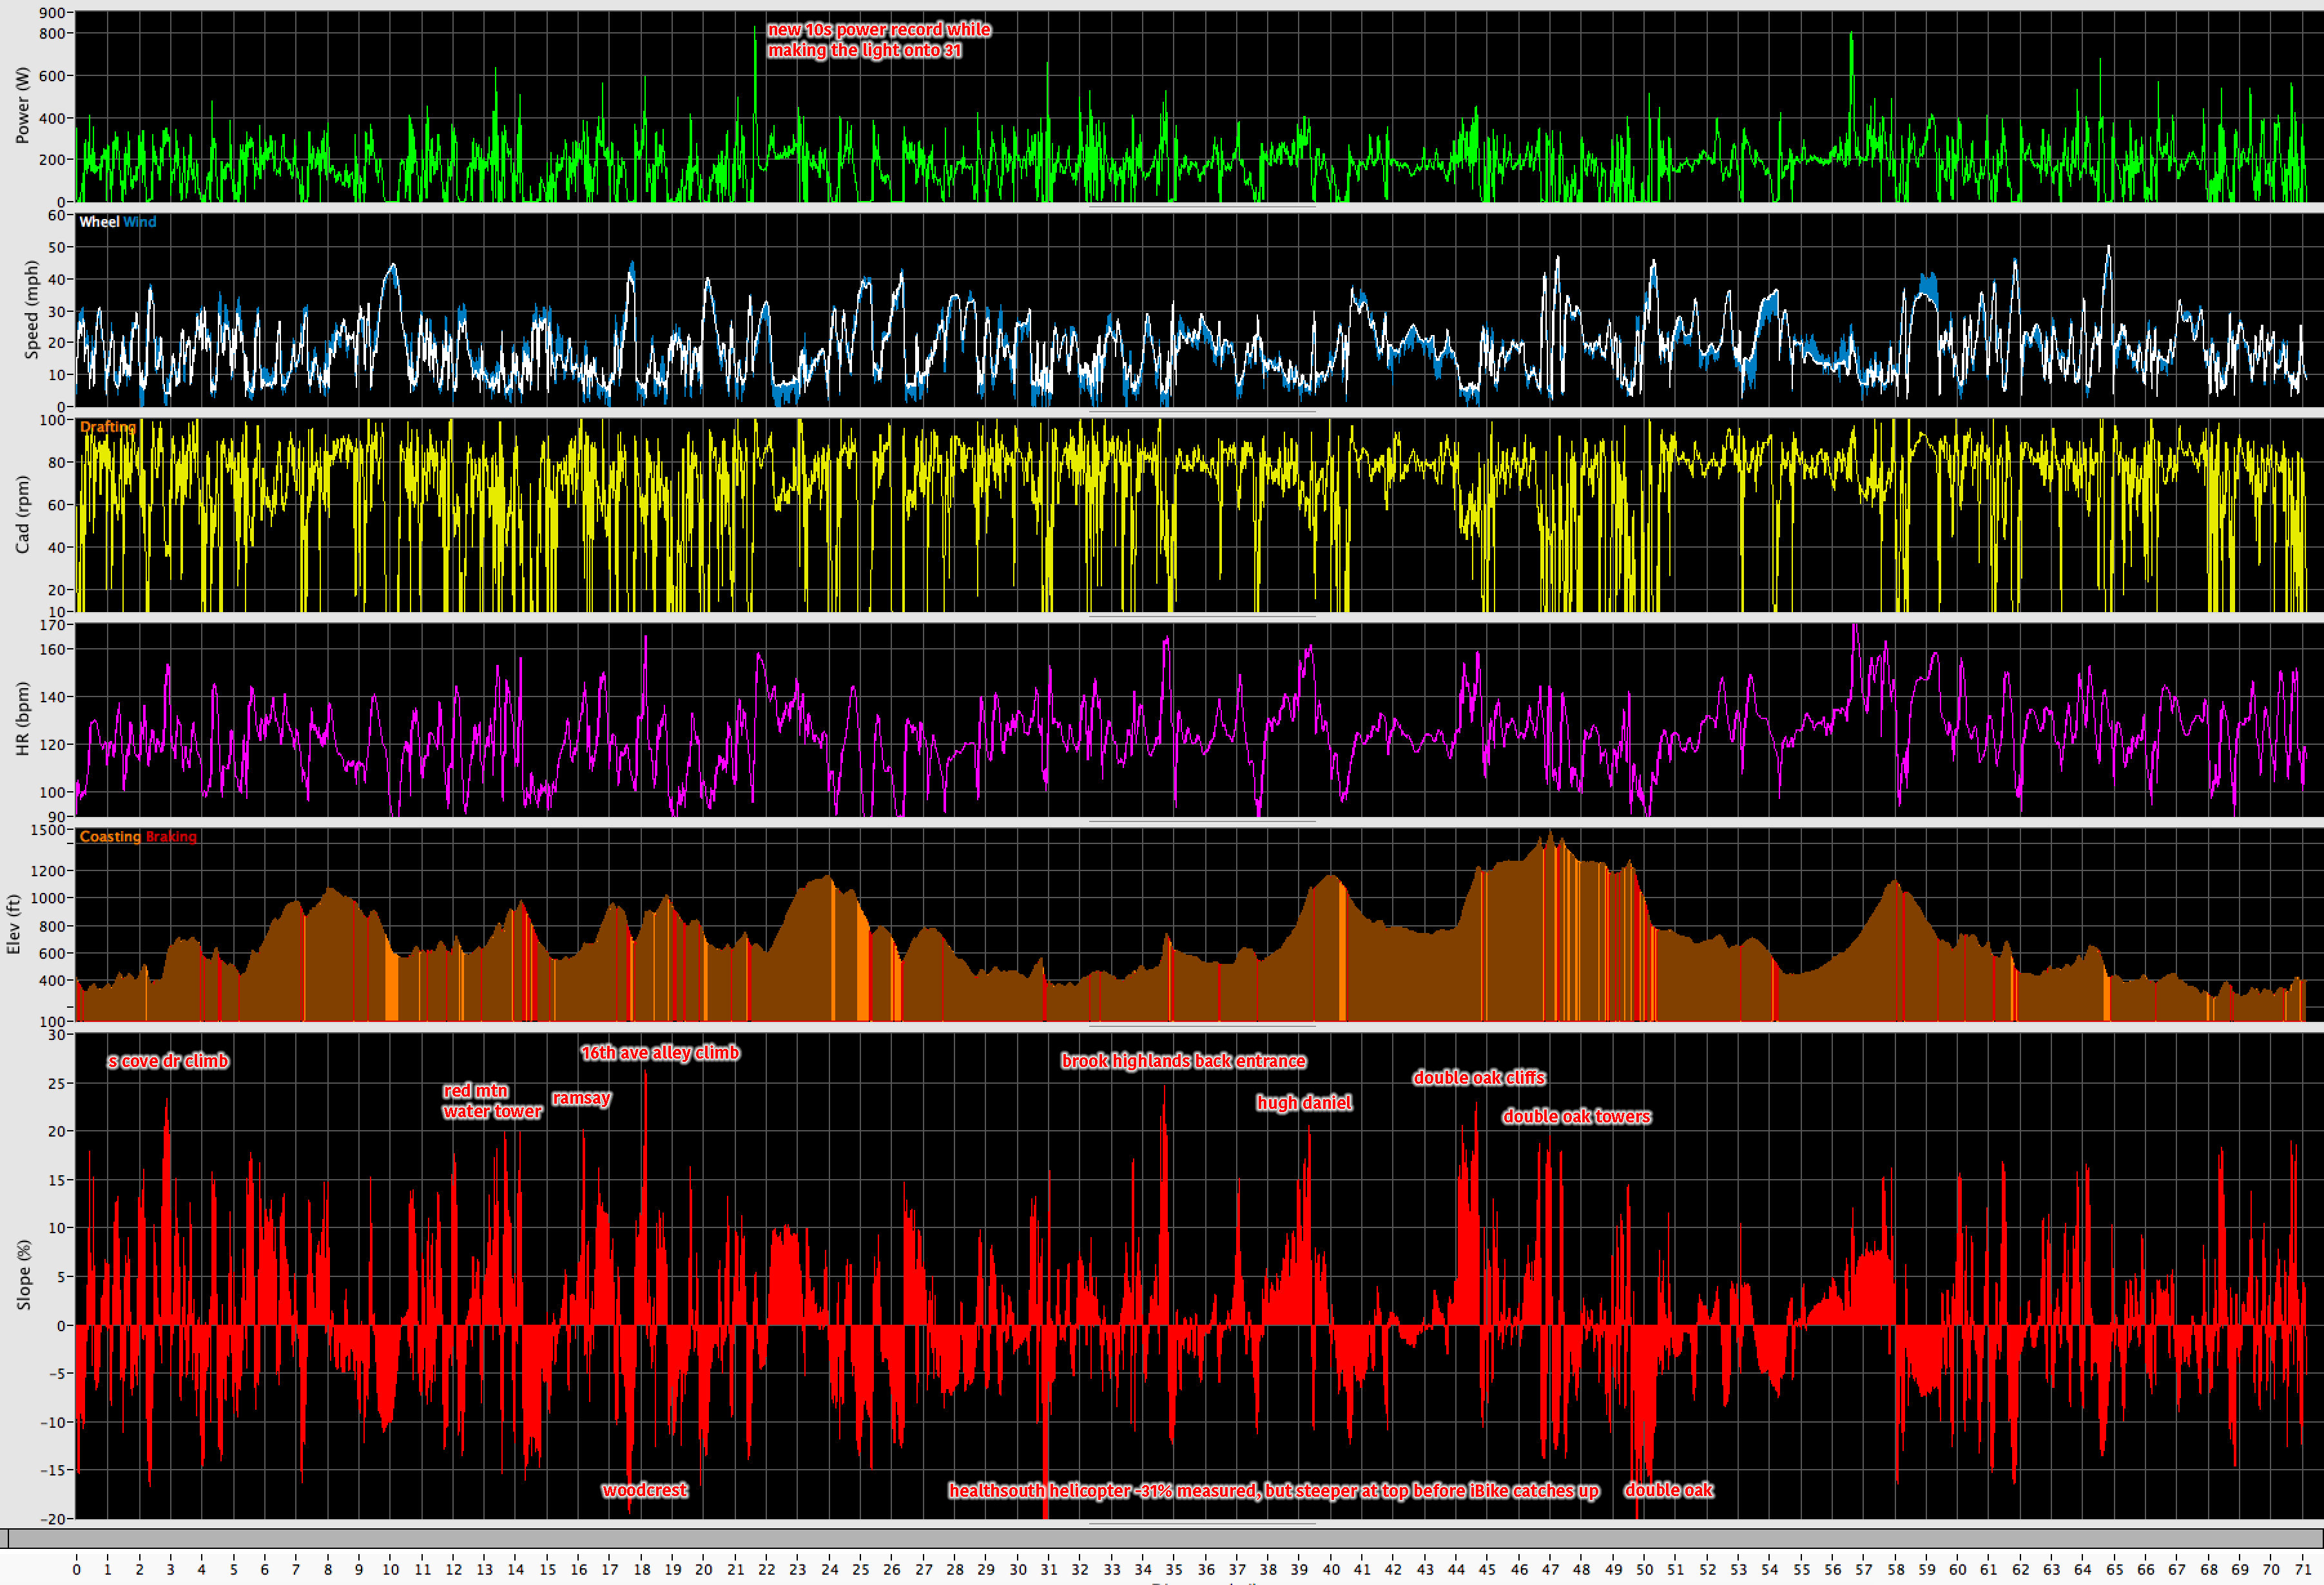 iBike data for the ridge-to-ridge-to-ridge ride. Click to enlarge.